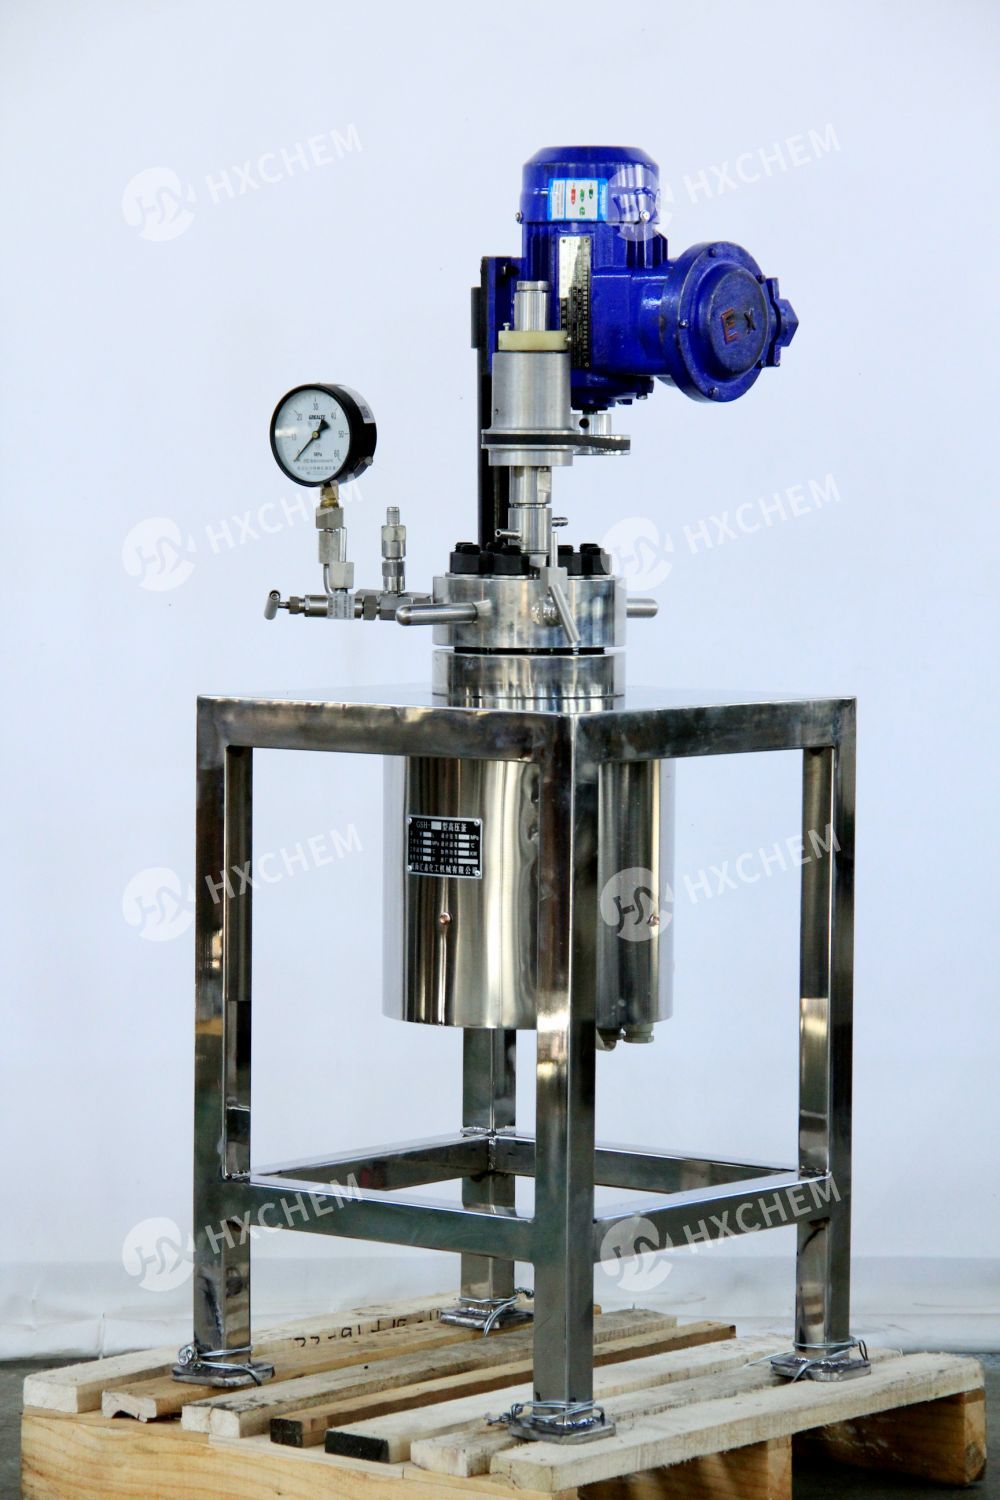 Laboratory pressure reactors